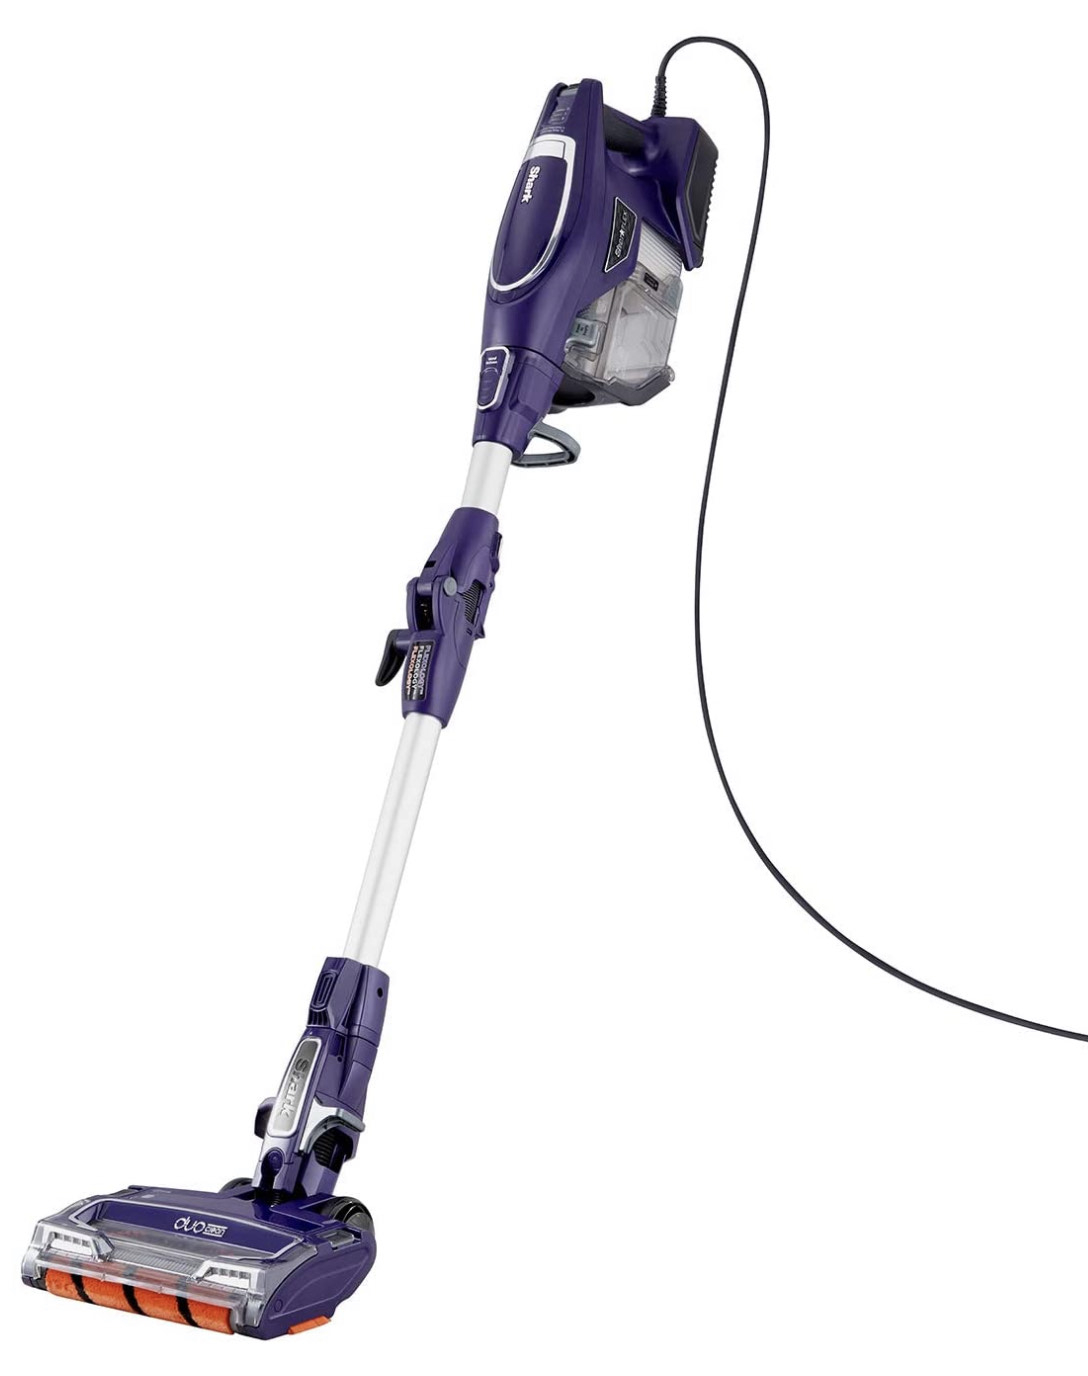 Stick Vacuum Cleaner Shark Corded Stick Vacuum Cleaner [HV390UK] Lightweight, Purple £120.79 at Amazon